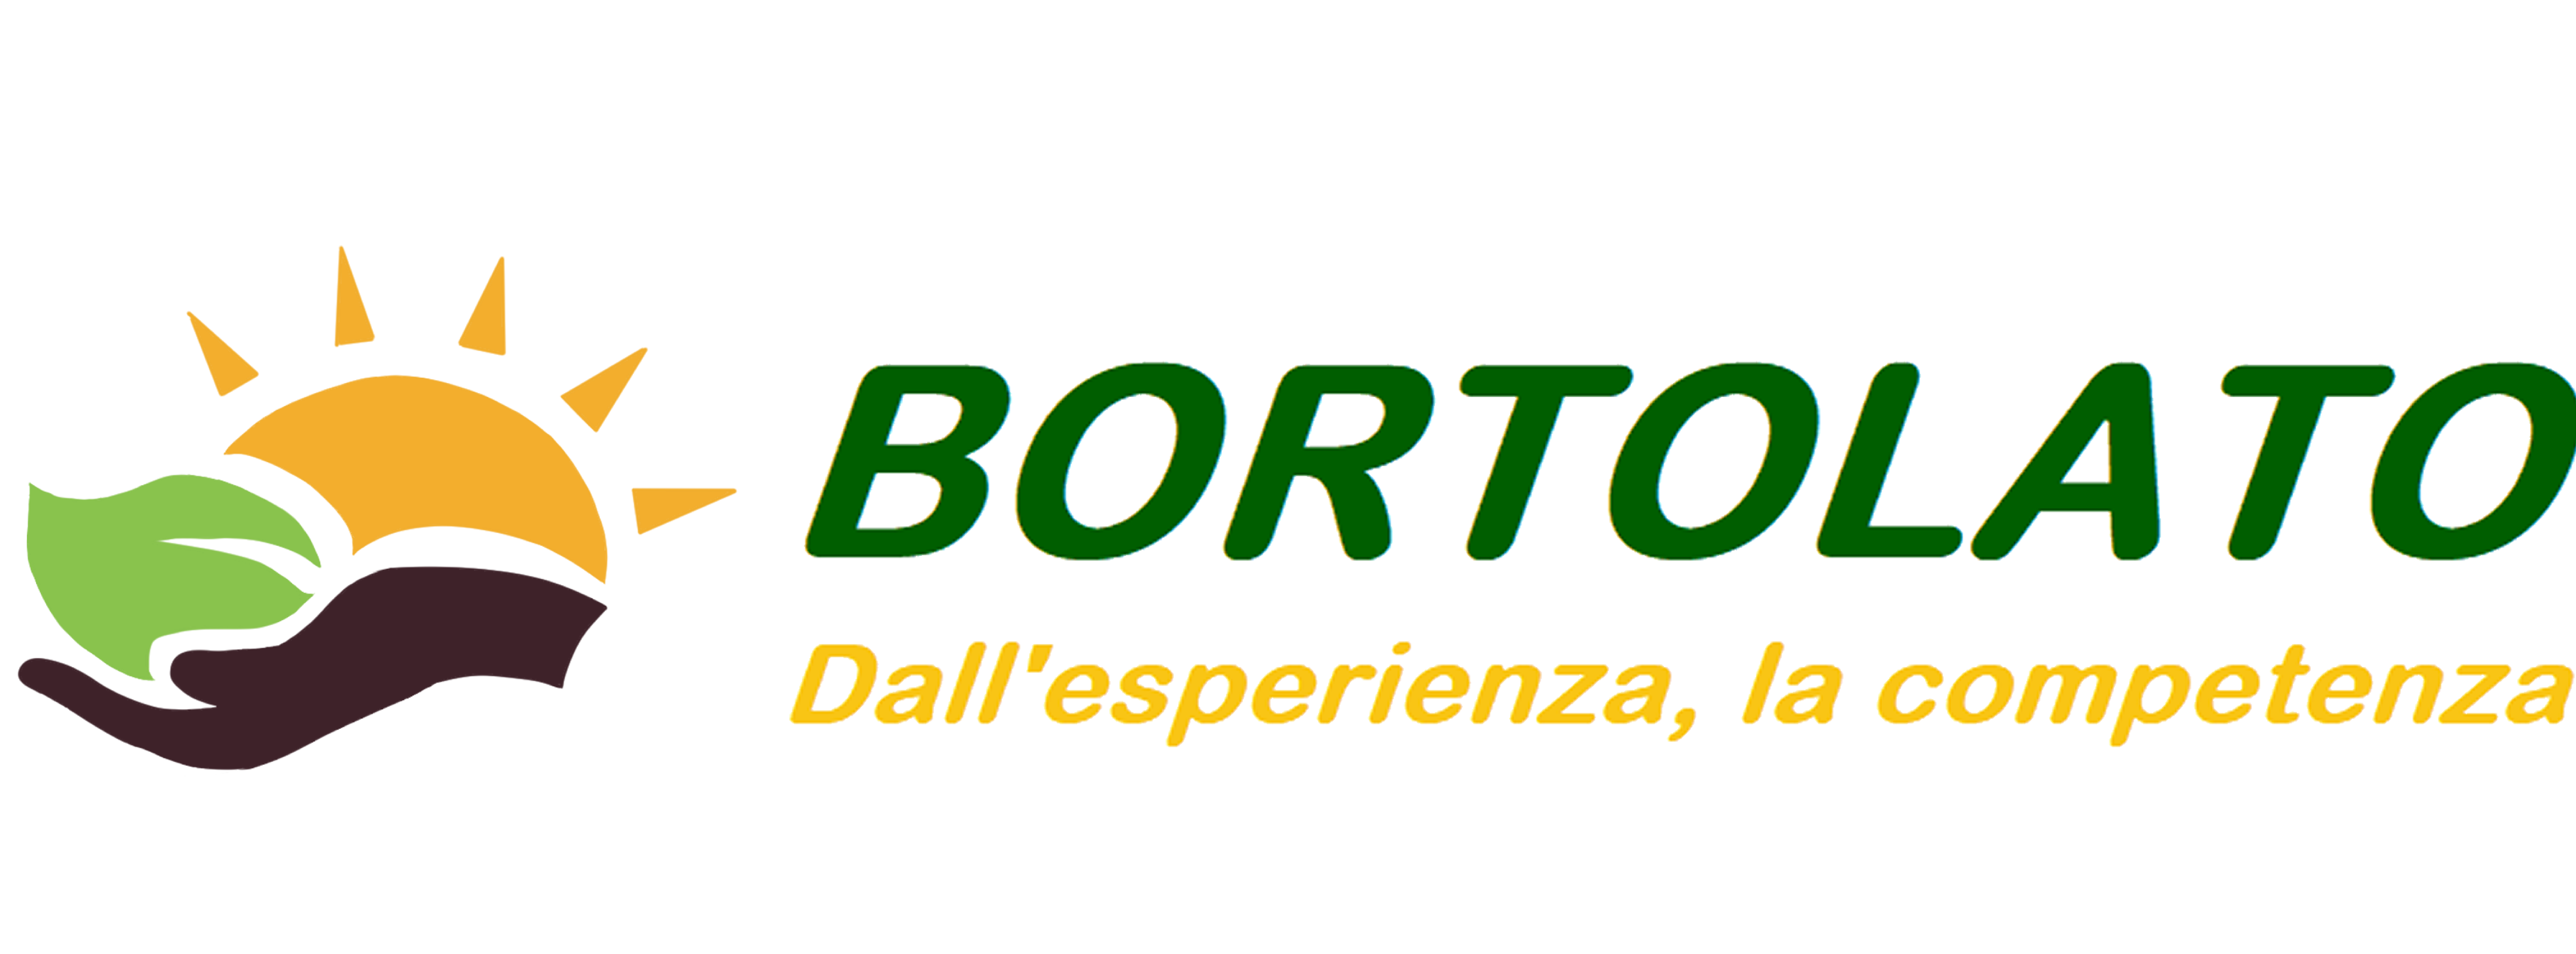 WWW.BORTOLATO.NET